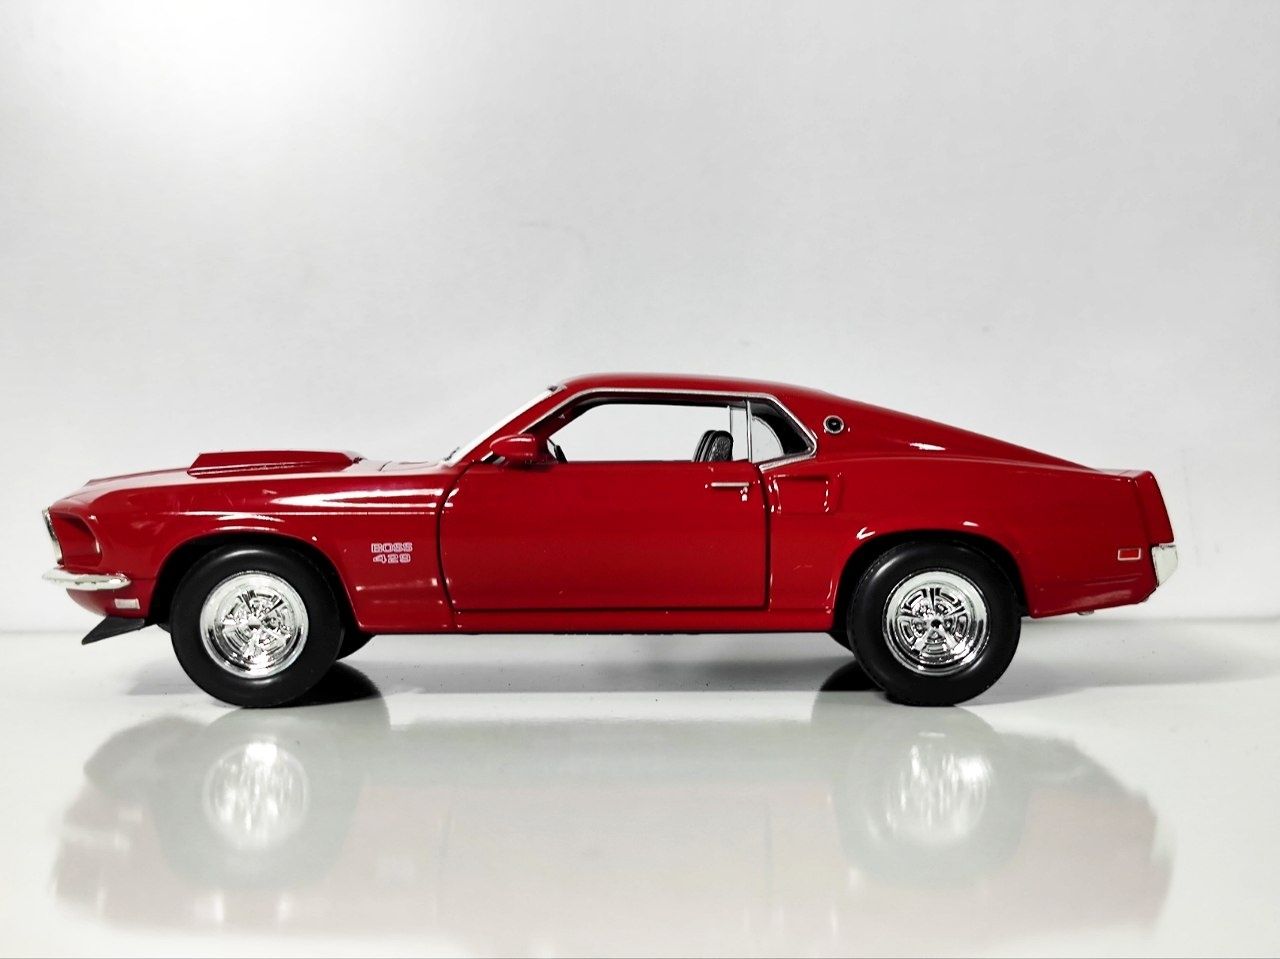 Ford Mustang 1967 Boss 429 Железная масштабная модель машинка - Достав